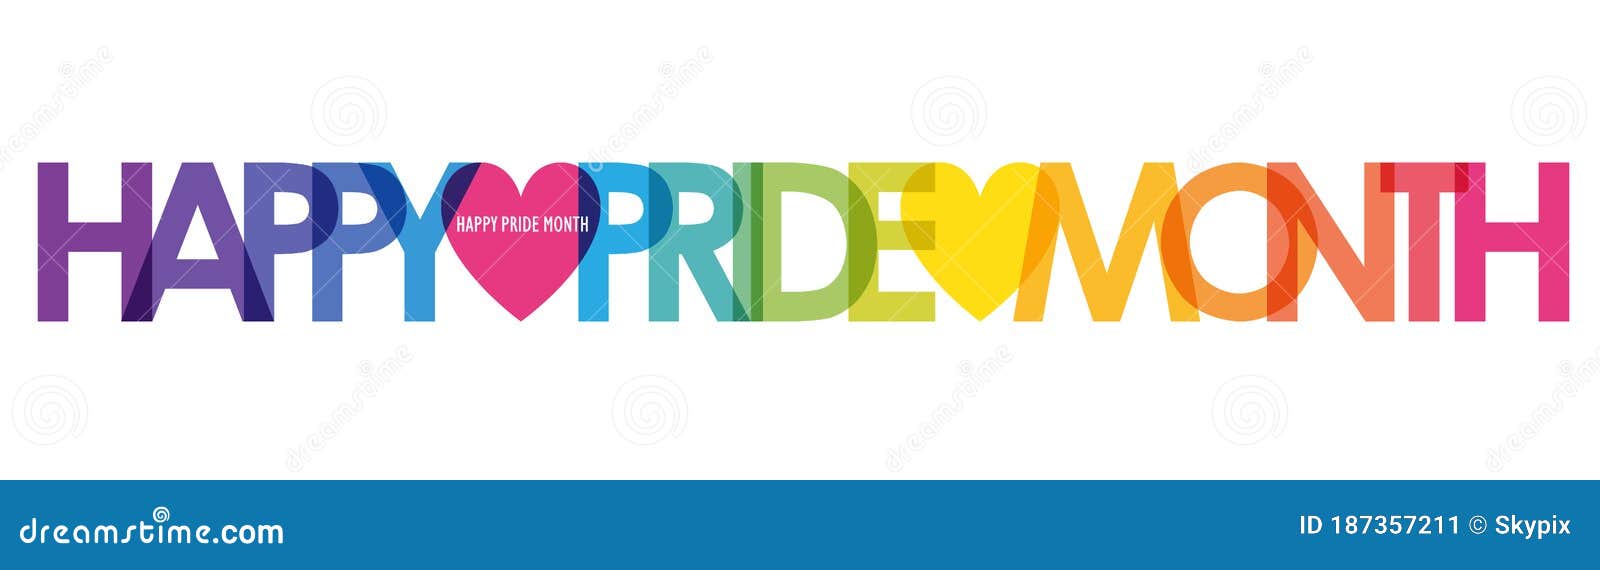 happy pride month rainbow typography banner